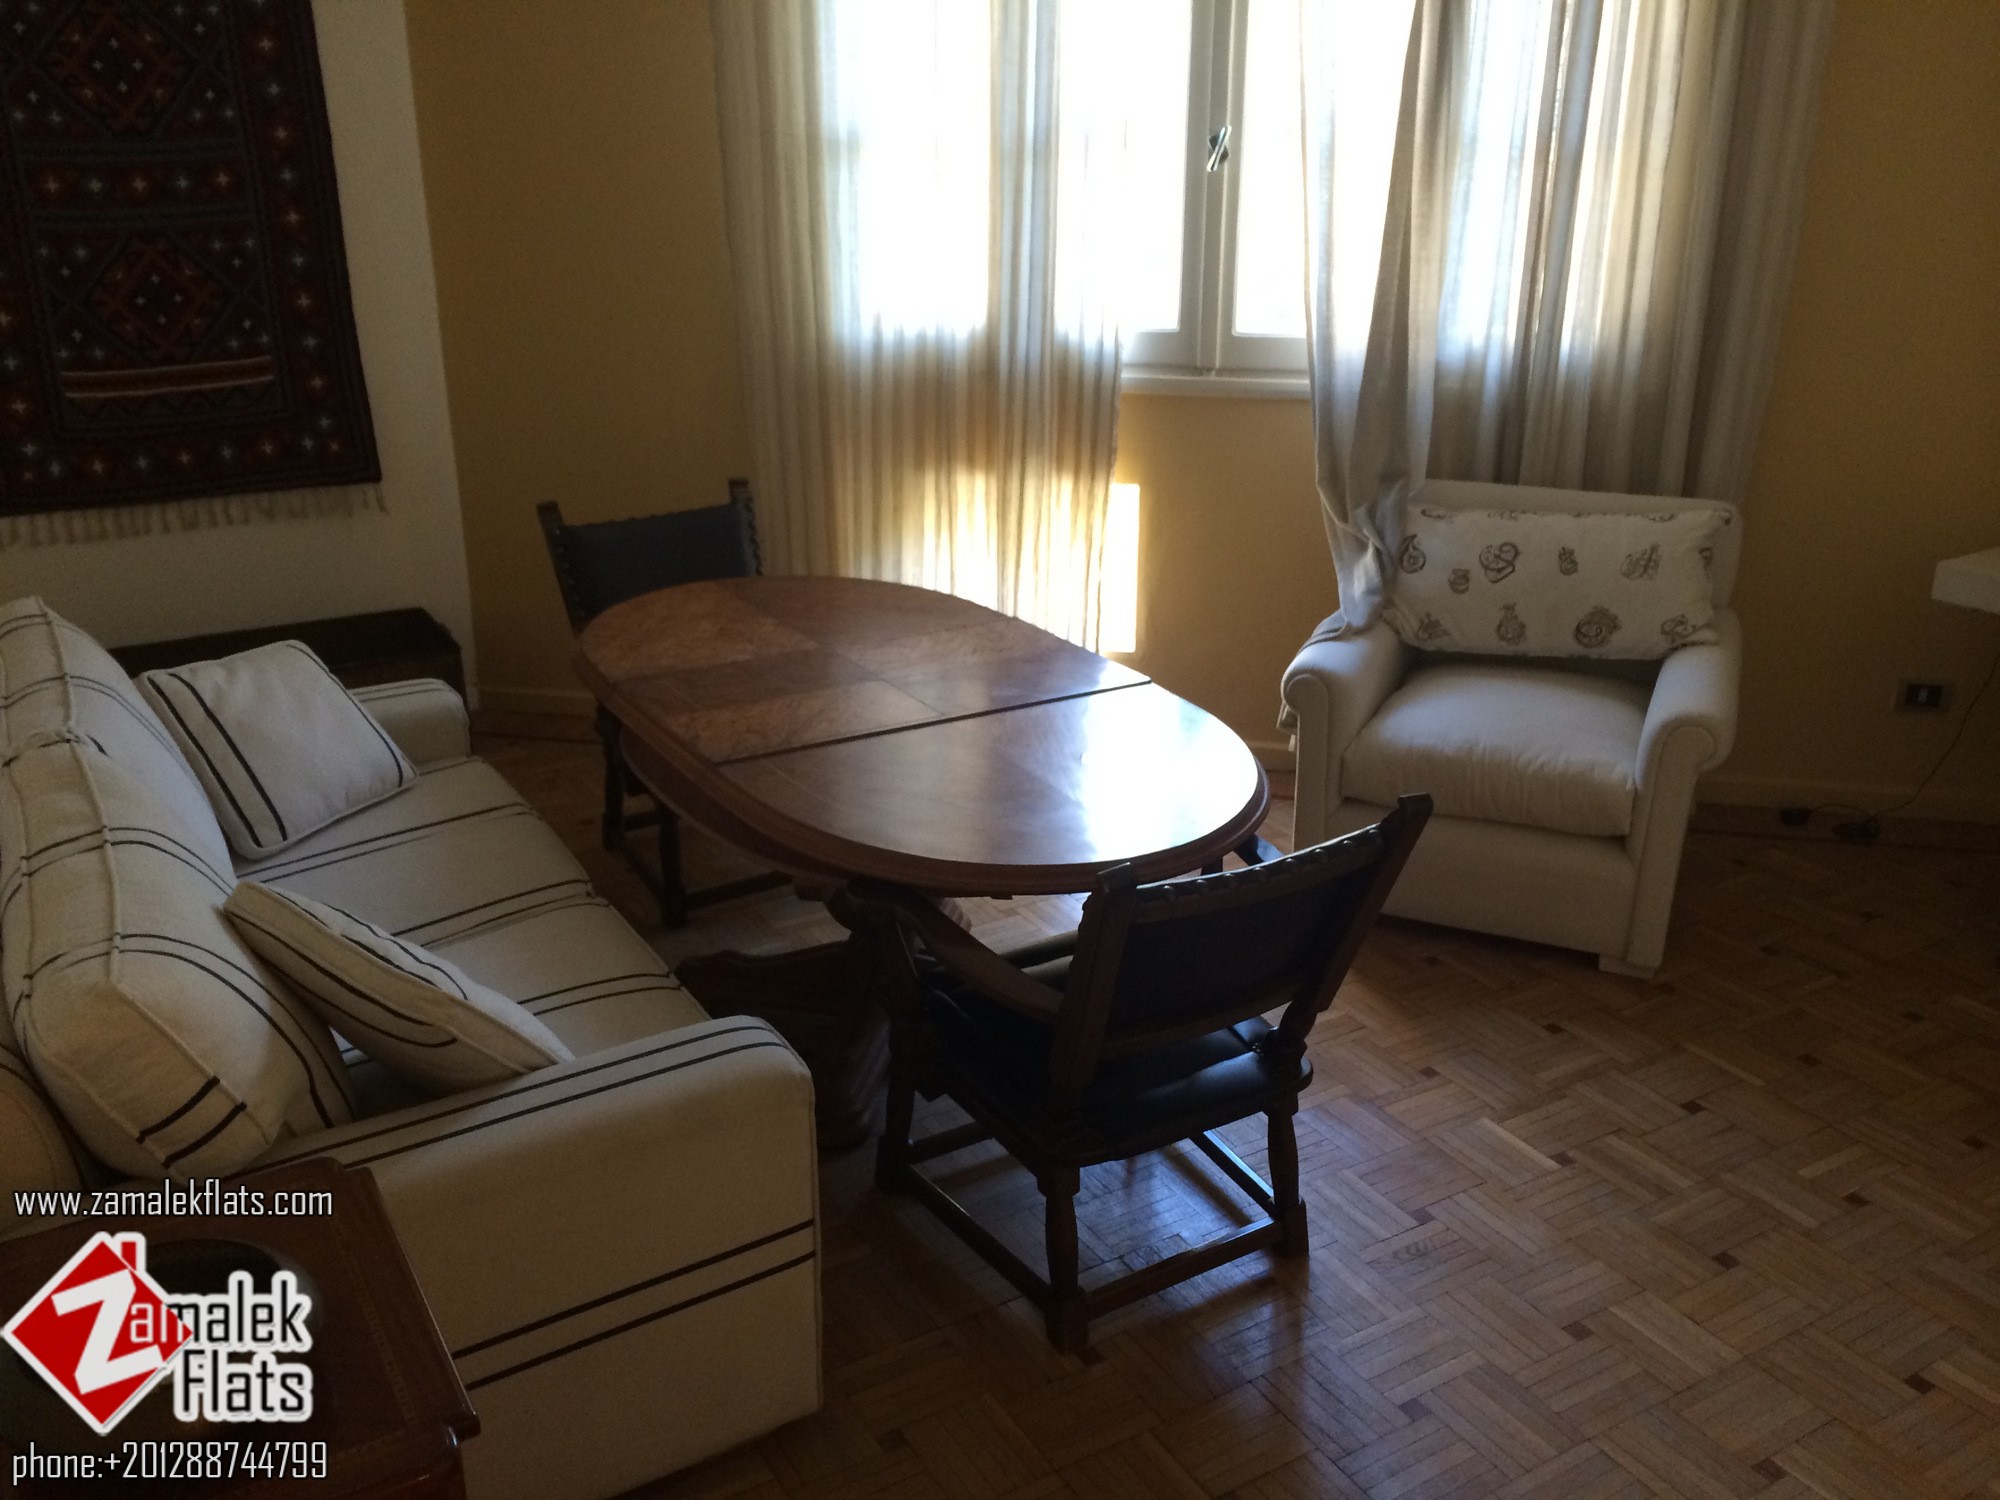 clean & furnished flat for rent in zamalek